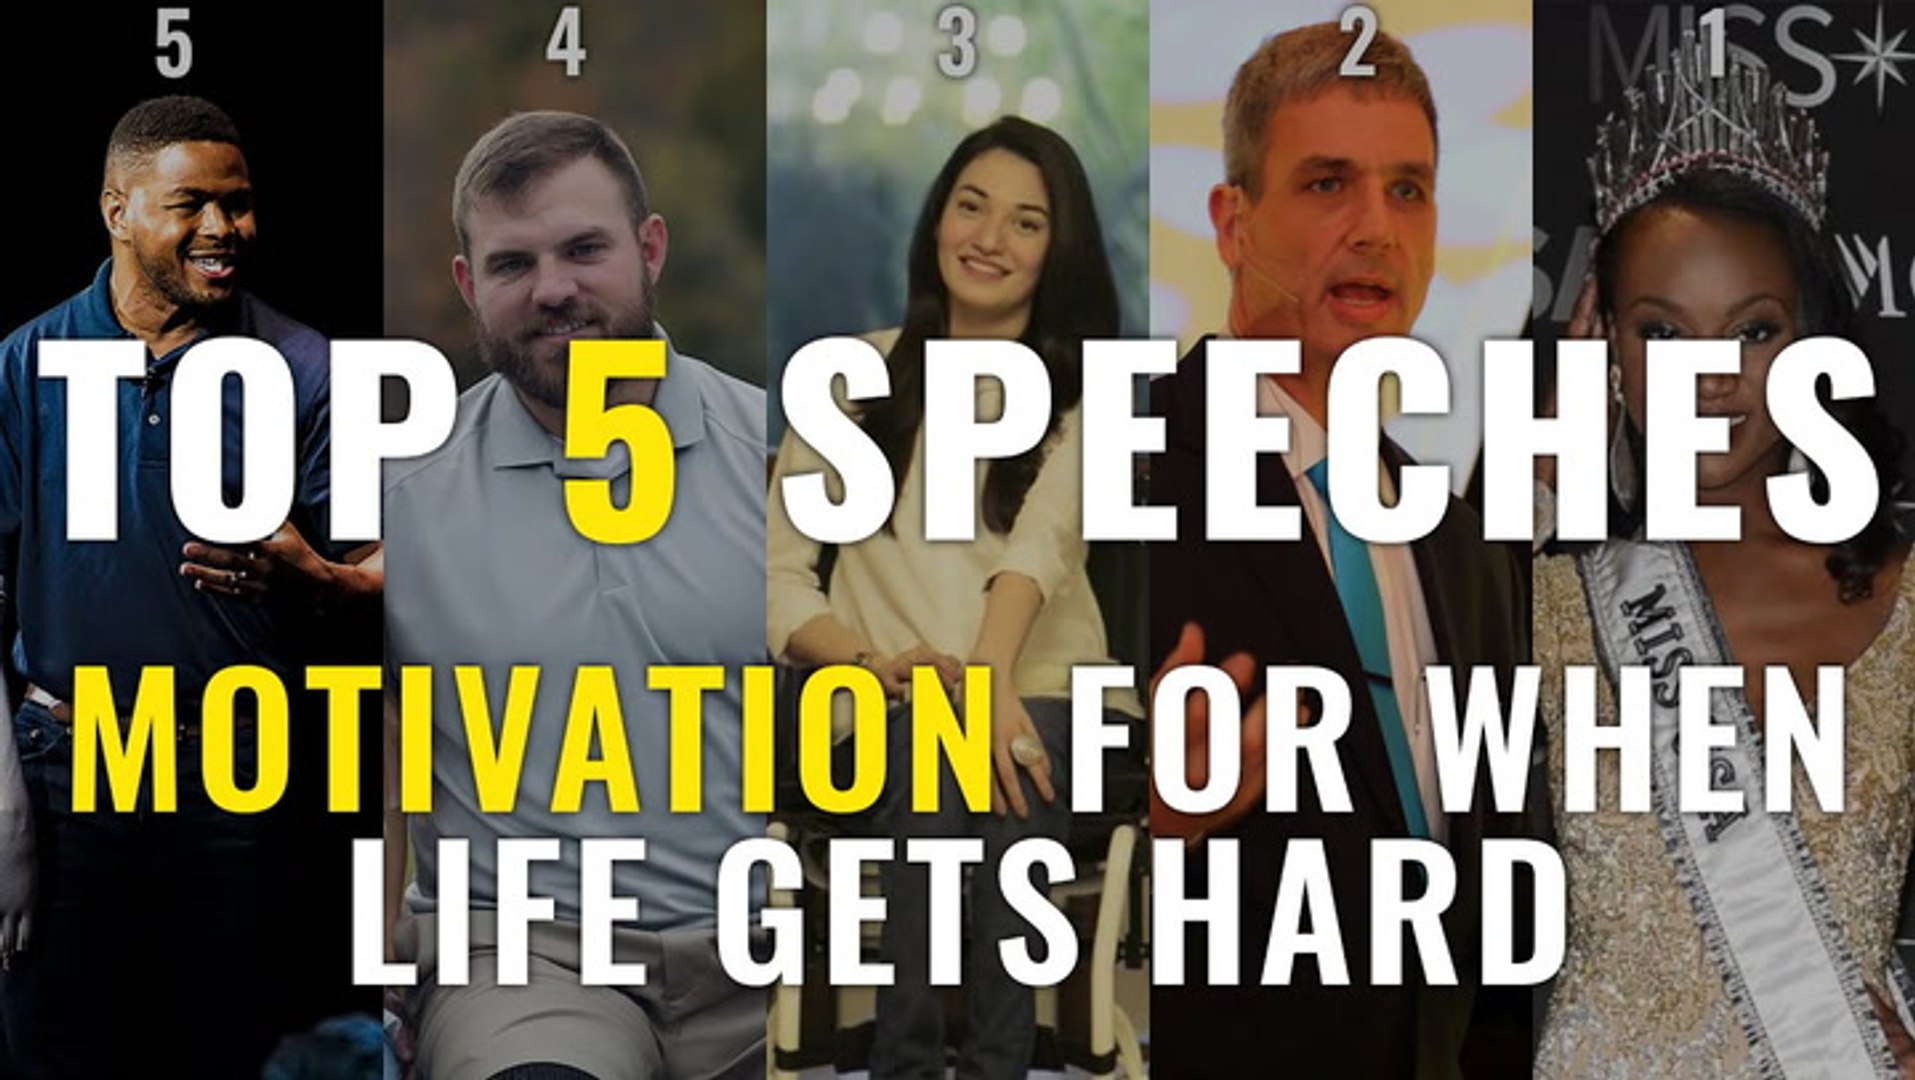 Top 5 LEGENDARY Speeches | Motivation For When Life Gets Hard | Goalcast